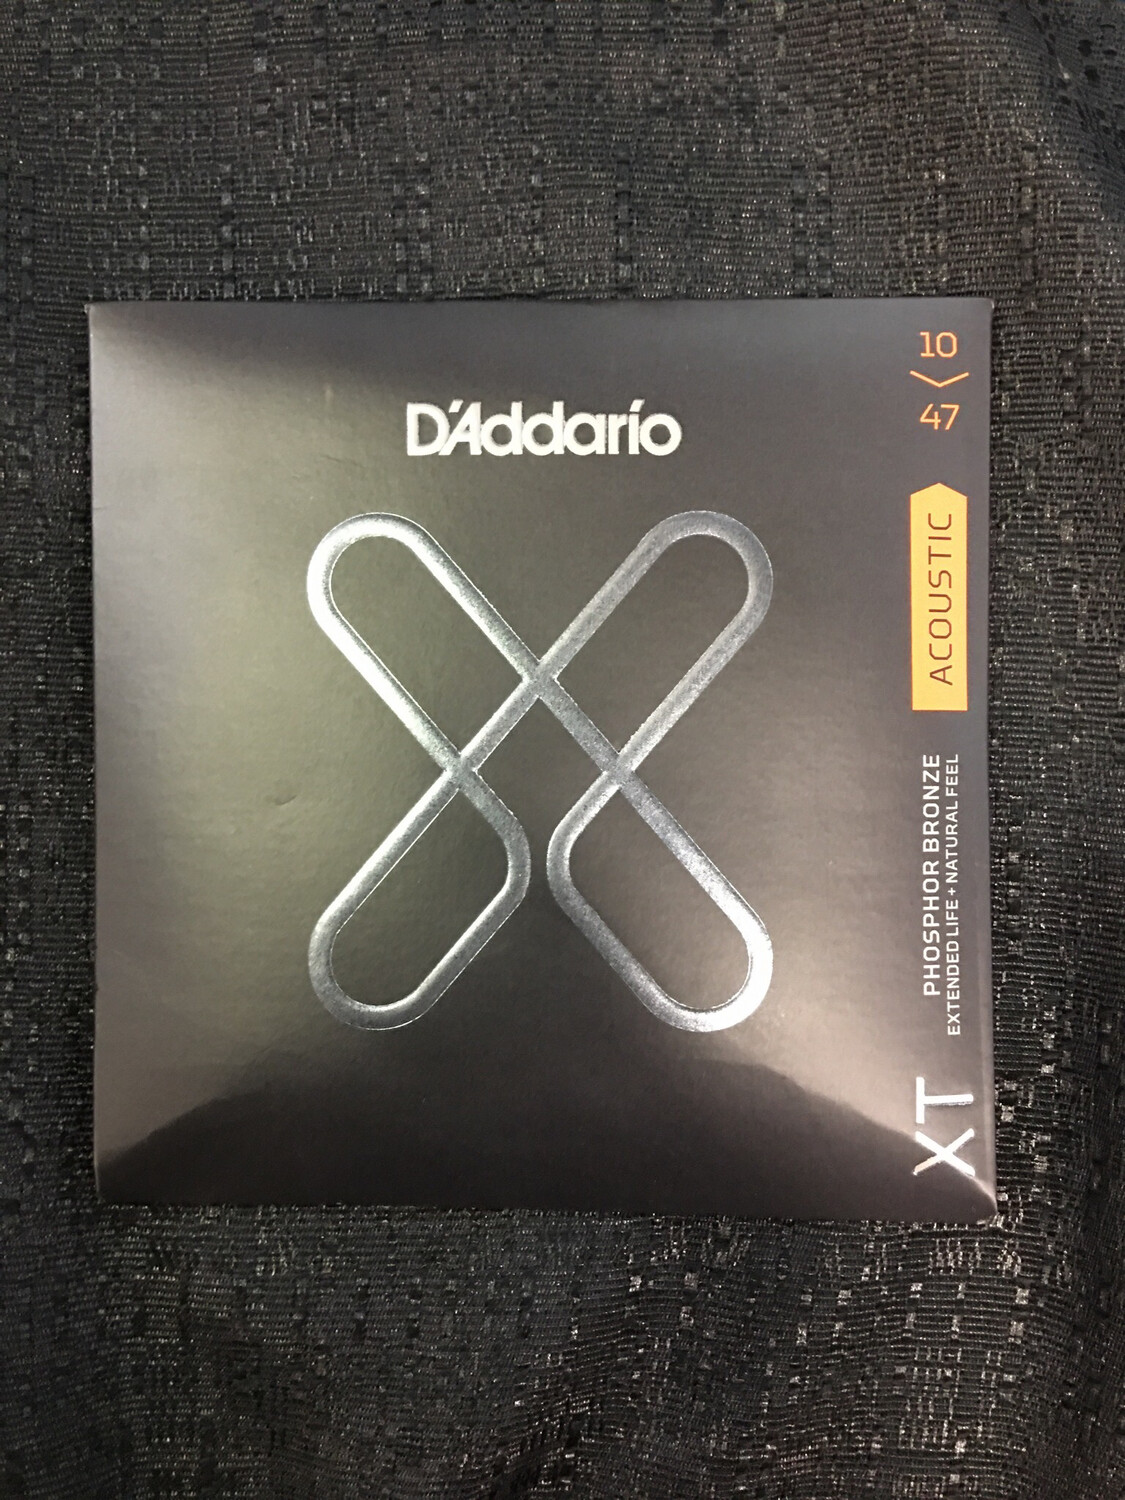 D’Addario - XT Phosphor Bronze  .010 - .047 Extra Light Gauge Acoustic Guitar Strings     XTAPB1047